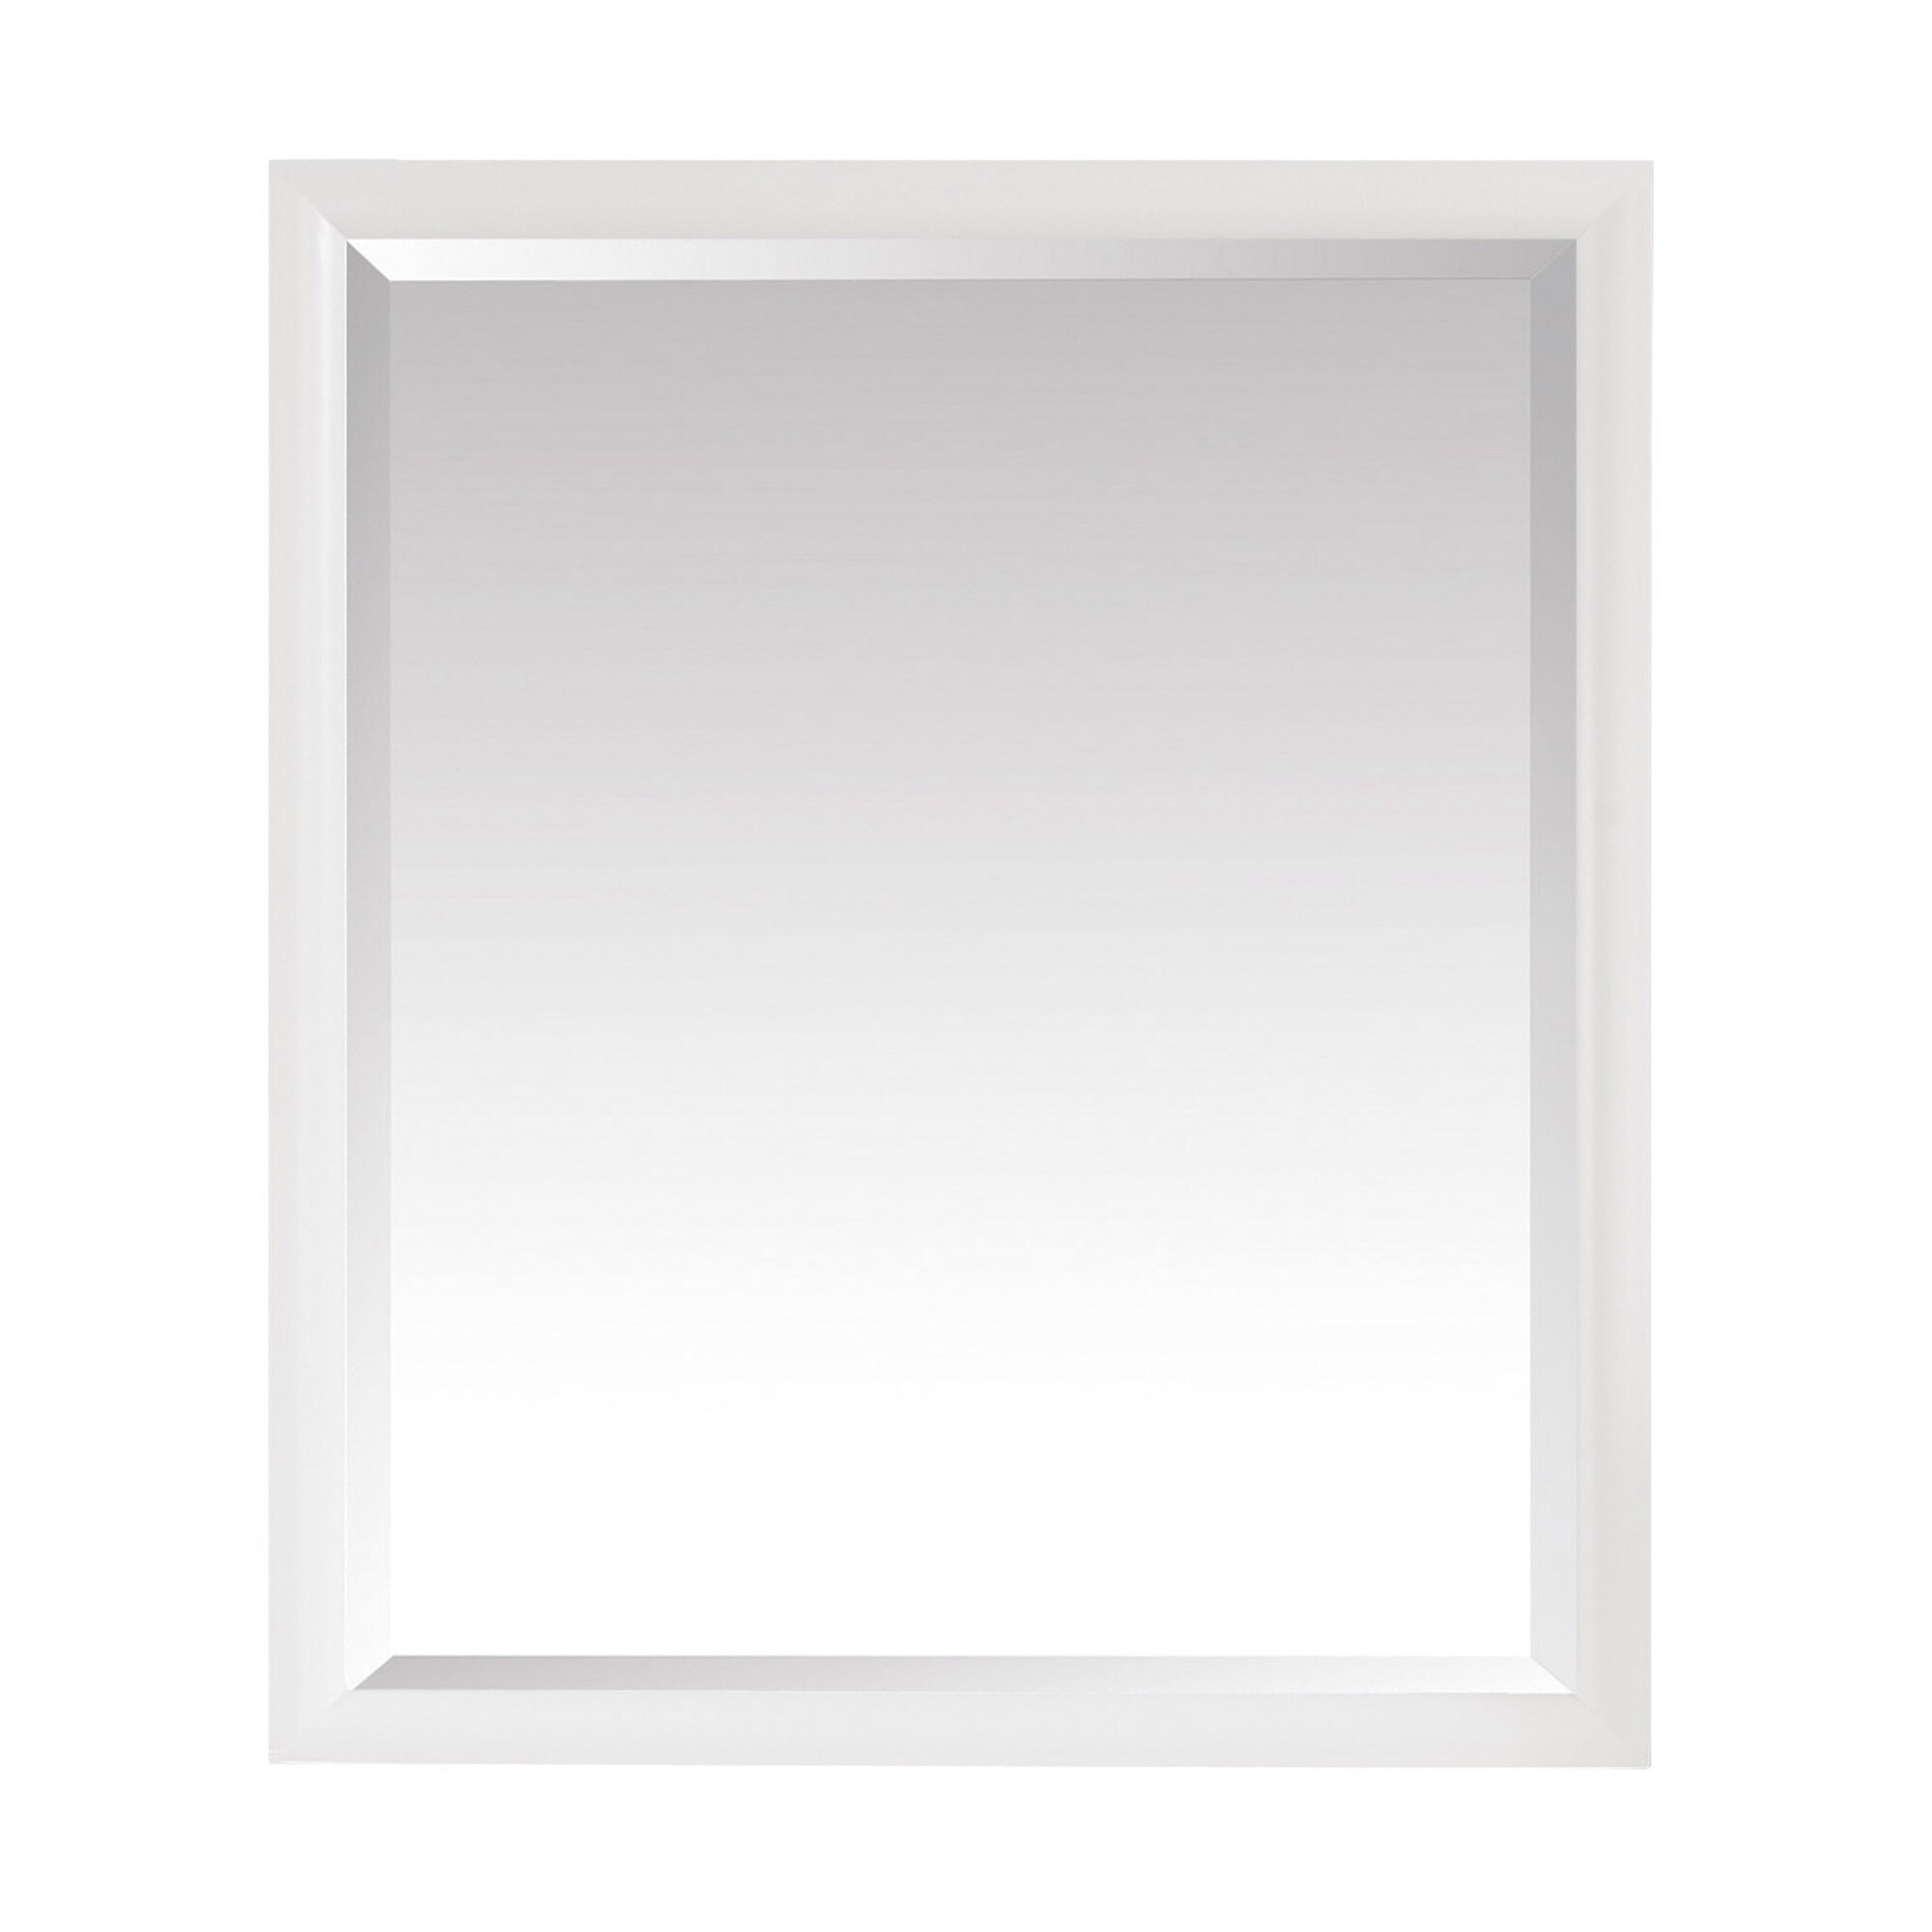 Avanity Emma 32" x 28" Framed Bathroom Mirror